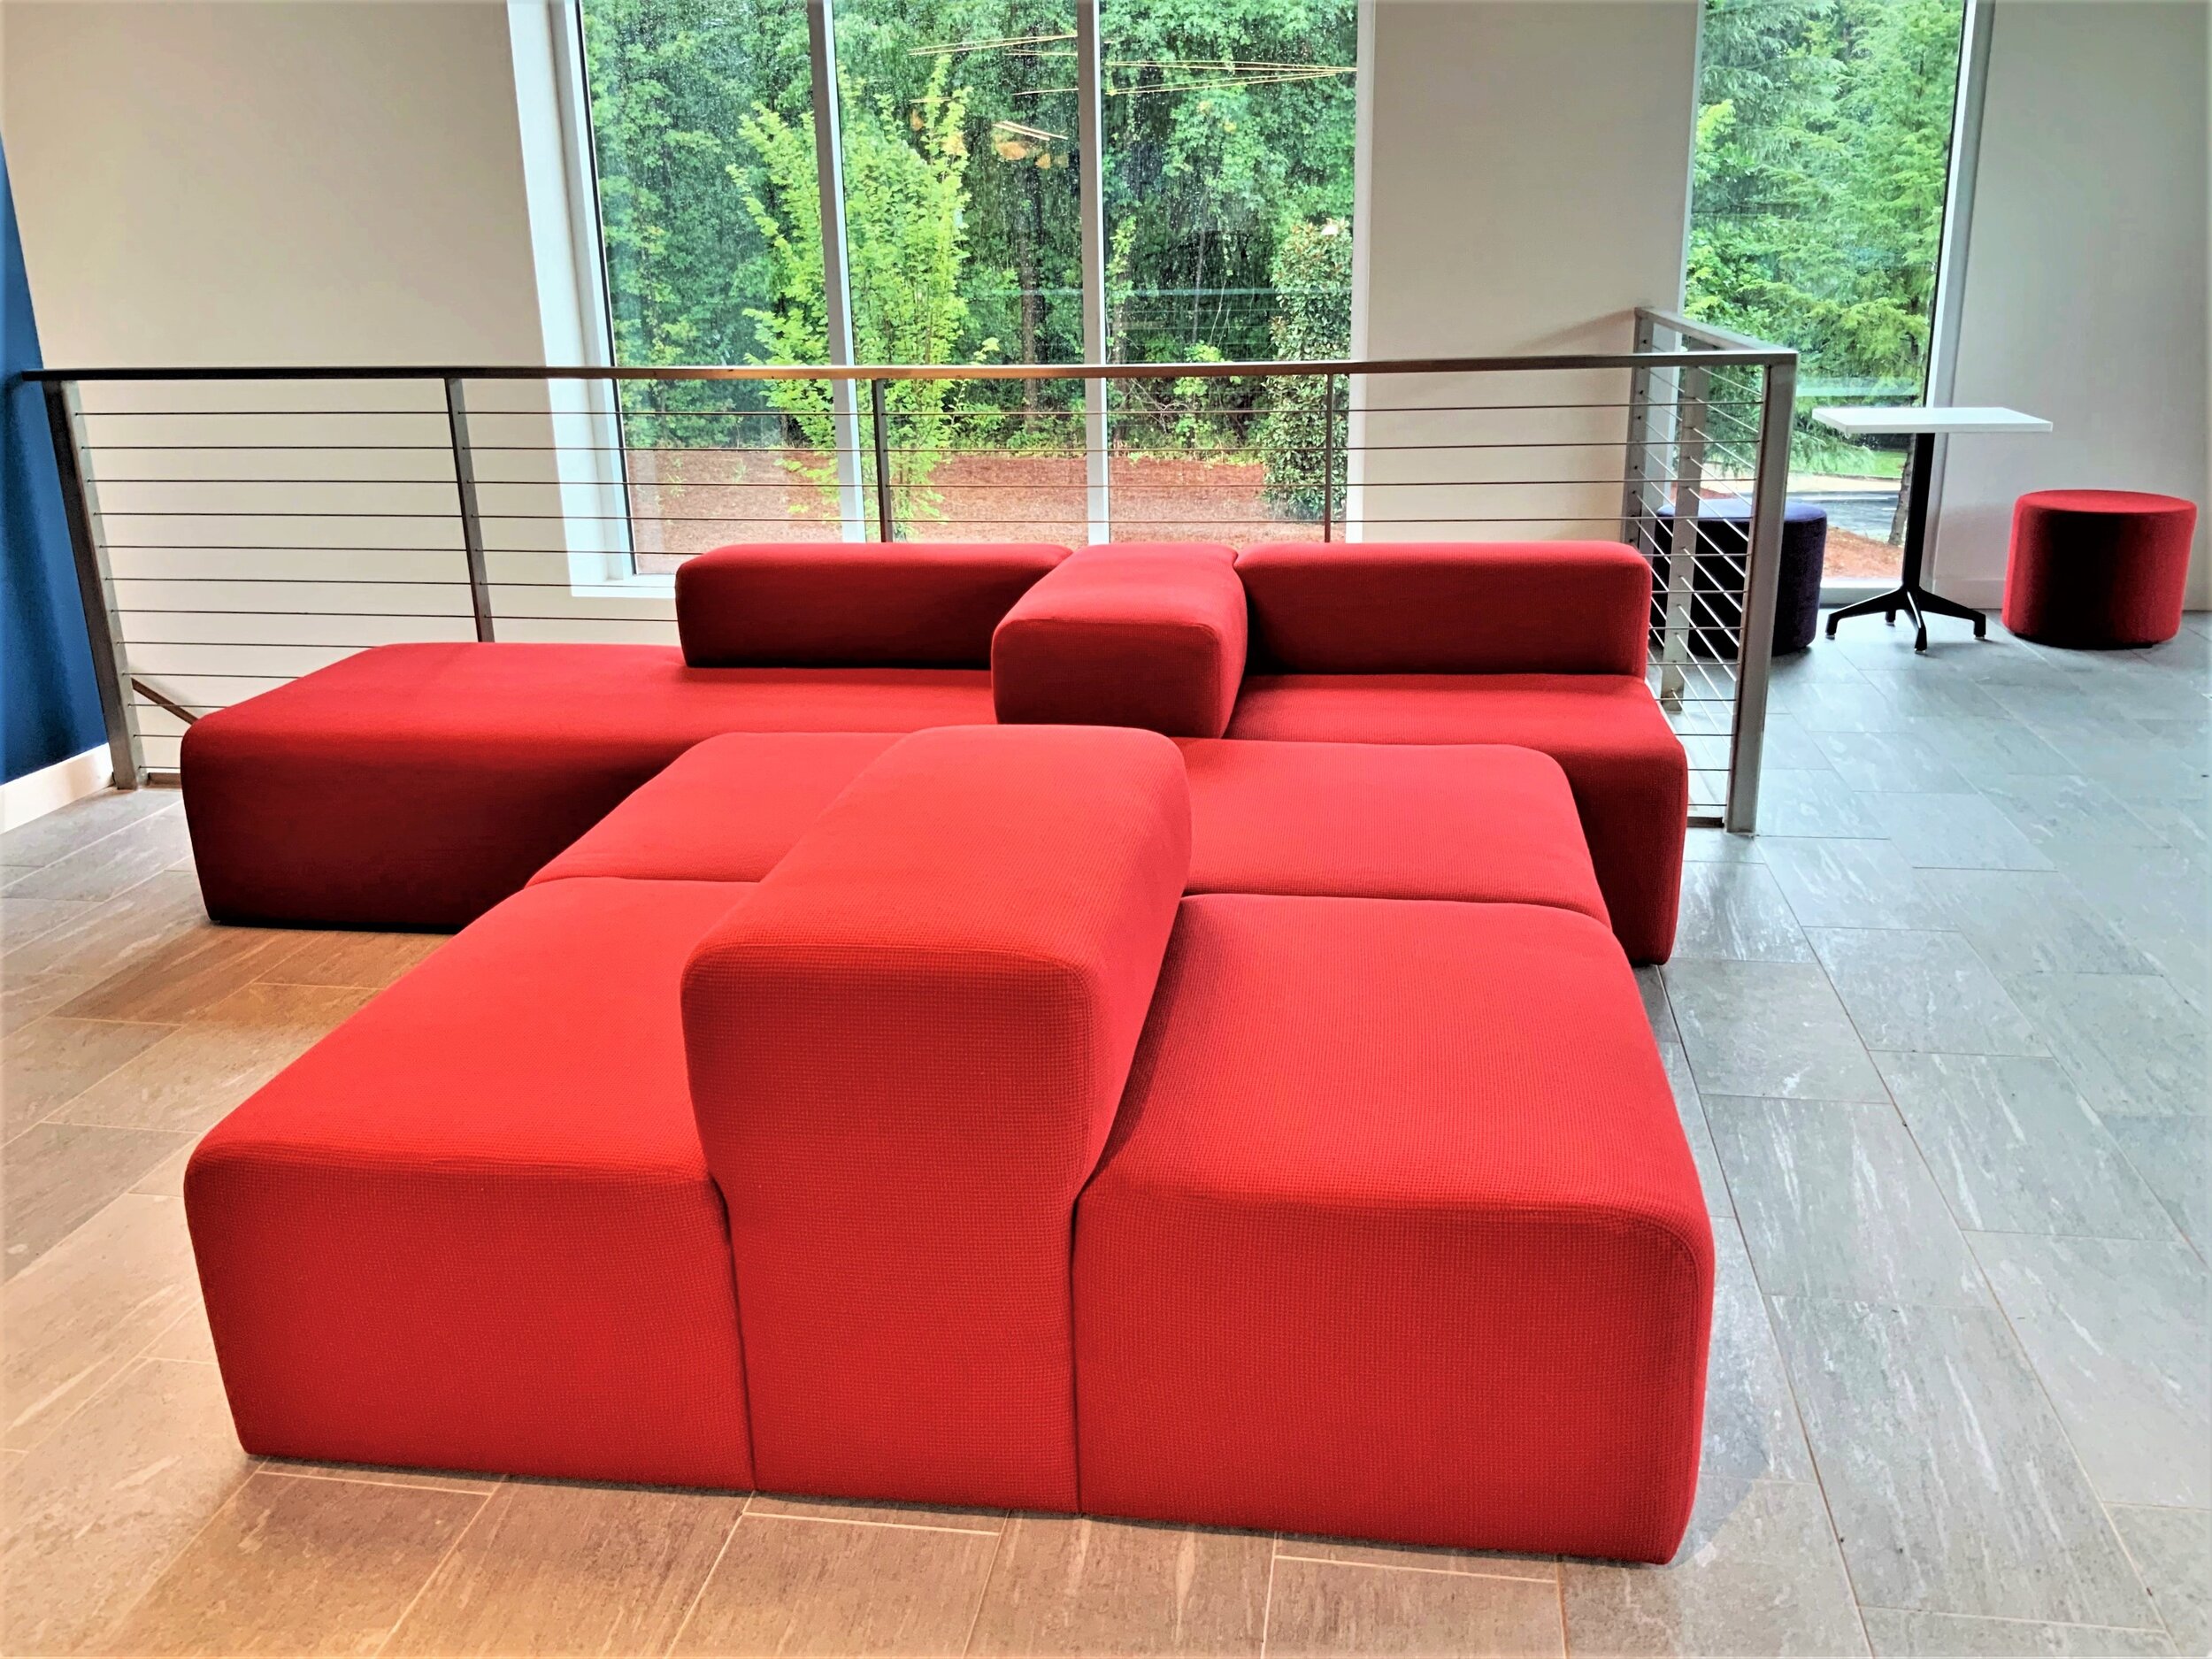 Custom-modular-seating-sanctuary-park-corn-upholstery.JPG